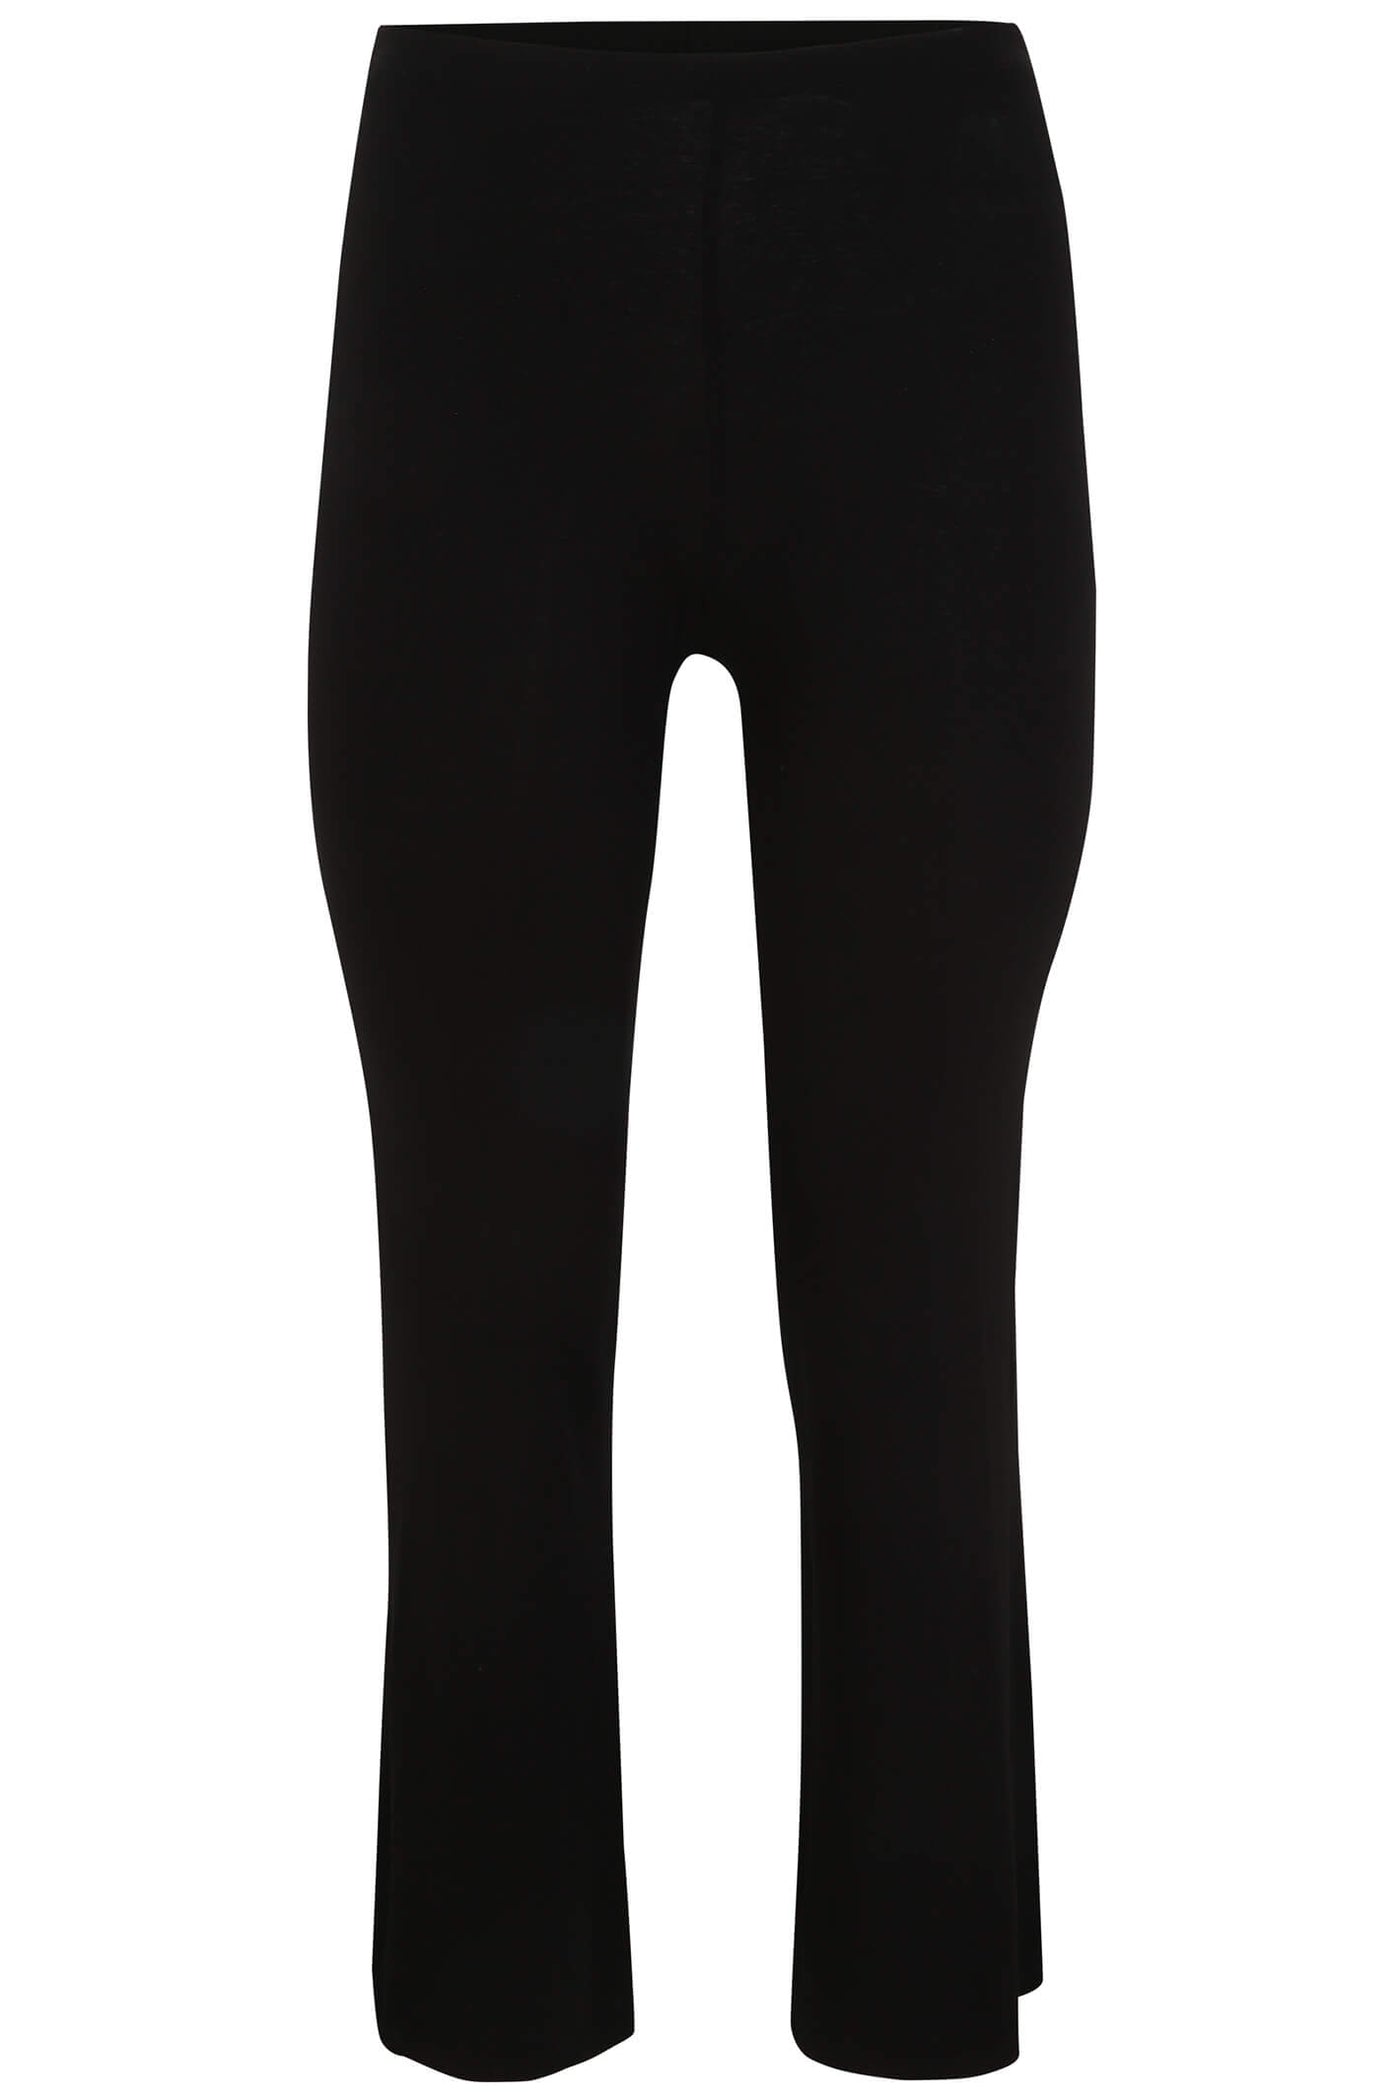 Doris Streich 809 270 Black Elastic Waist Pull-On Trousers - Rouge Boutique